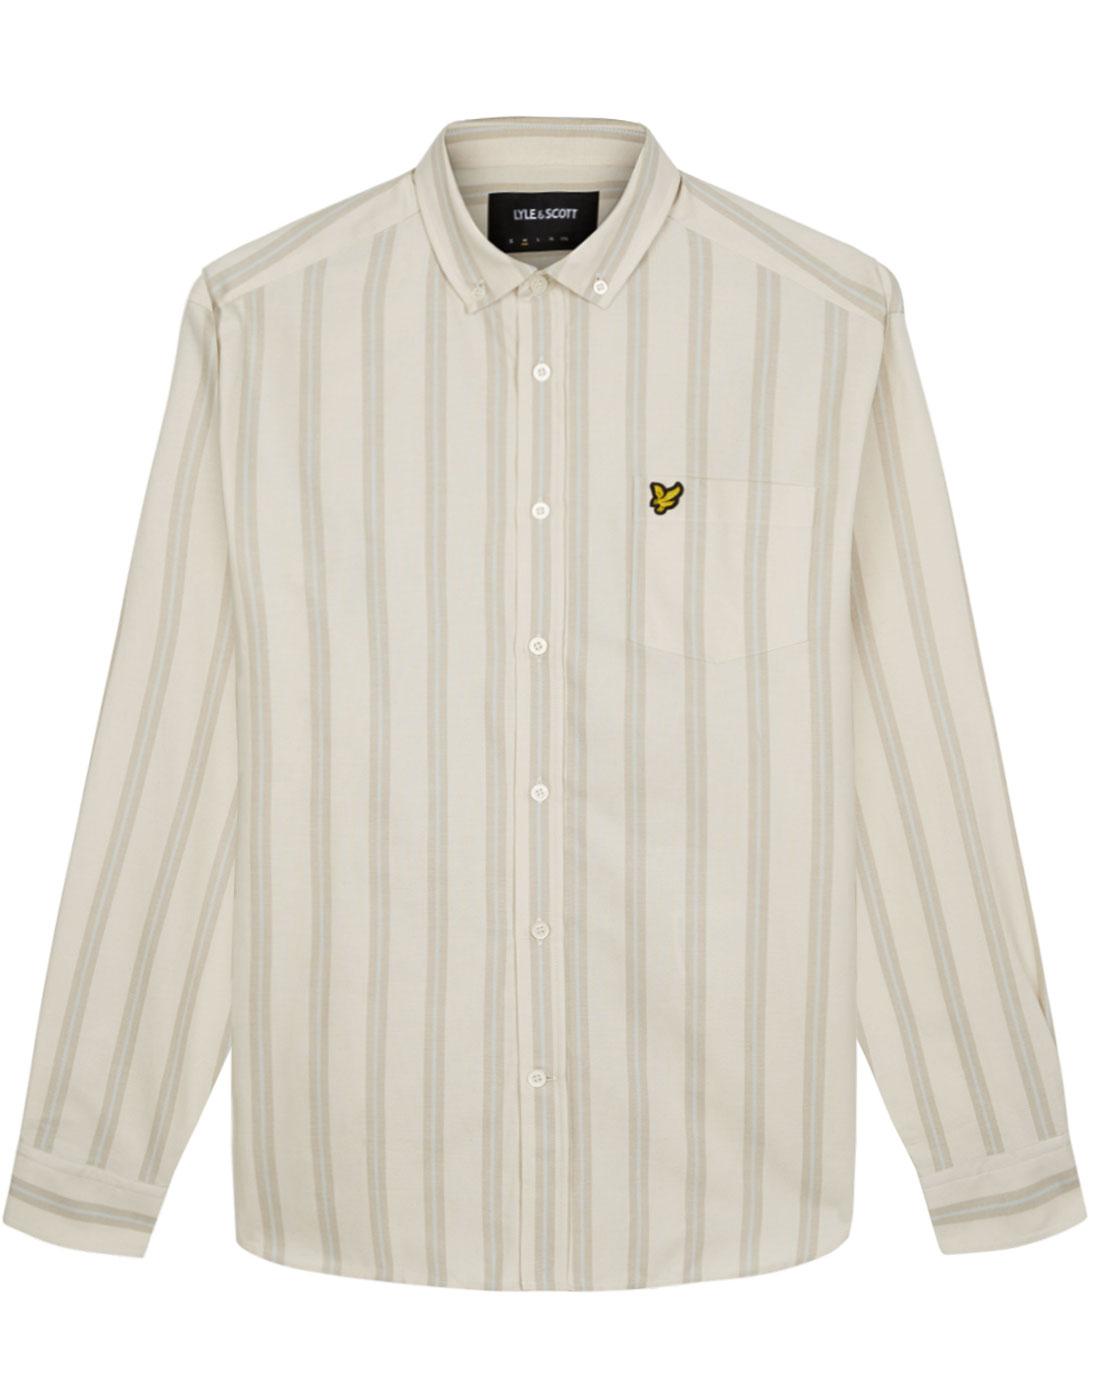 LYLE & SCOTT Mod Deckchair Stripe Button Down Oxford Shirt